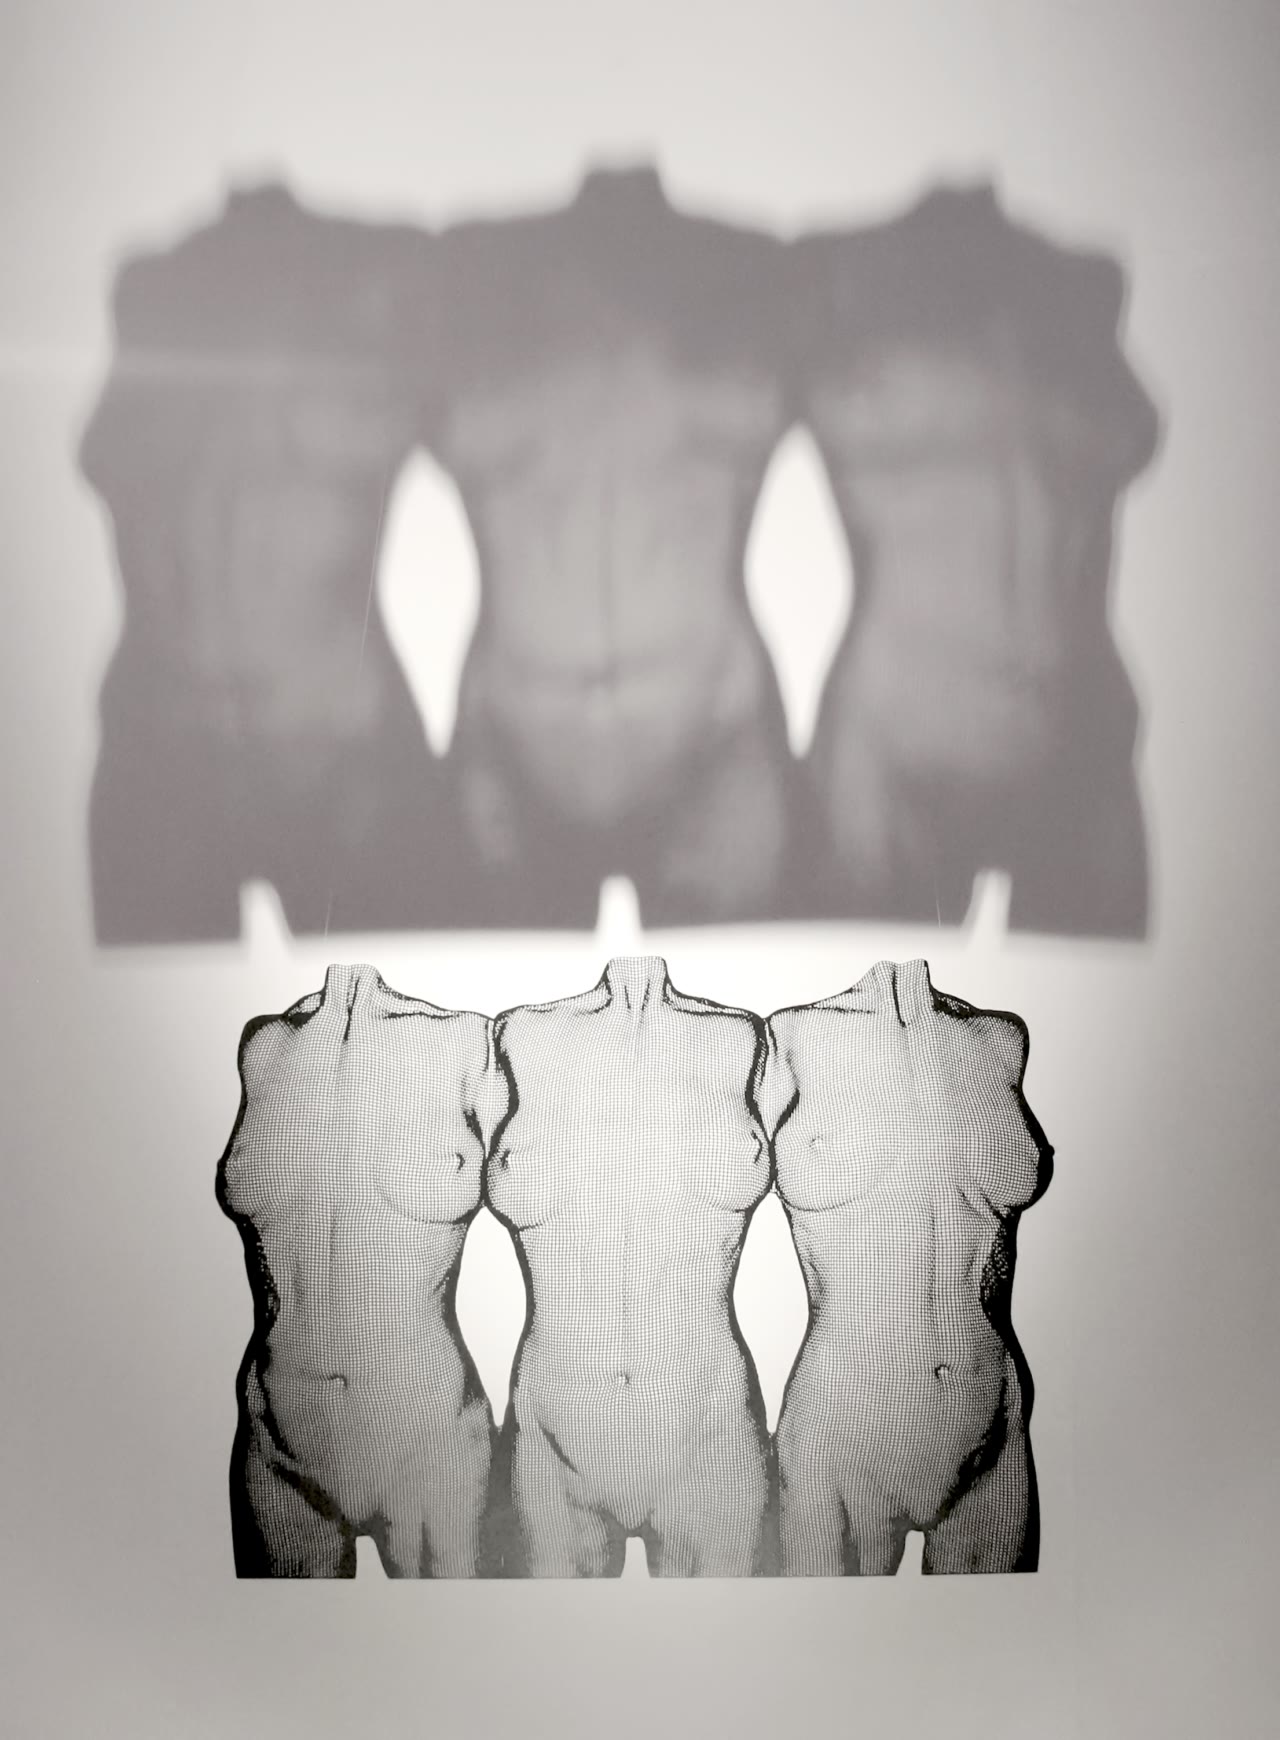 x David Begbie sculpture INTEMATES II with shadow